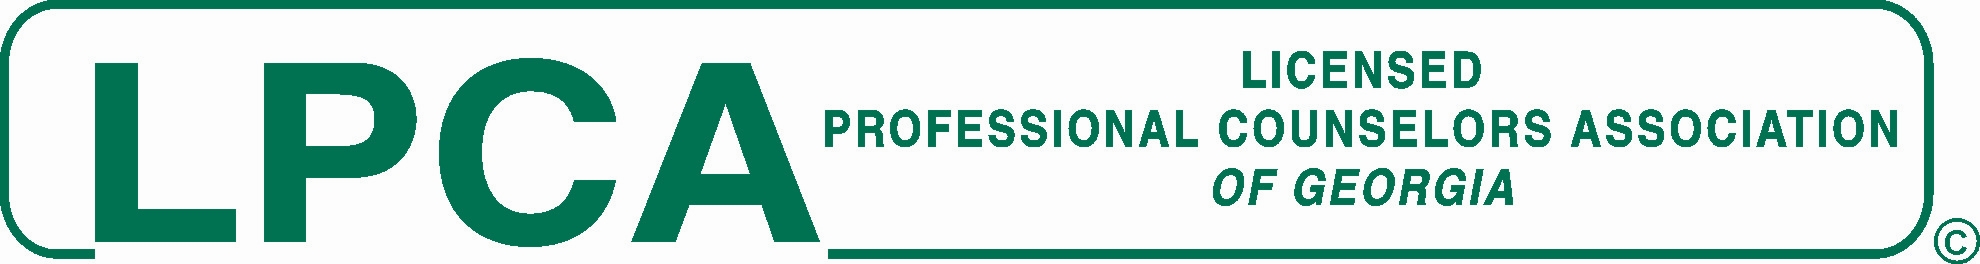 LPCA logo - Licensed Professional Counselors of Georgia